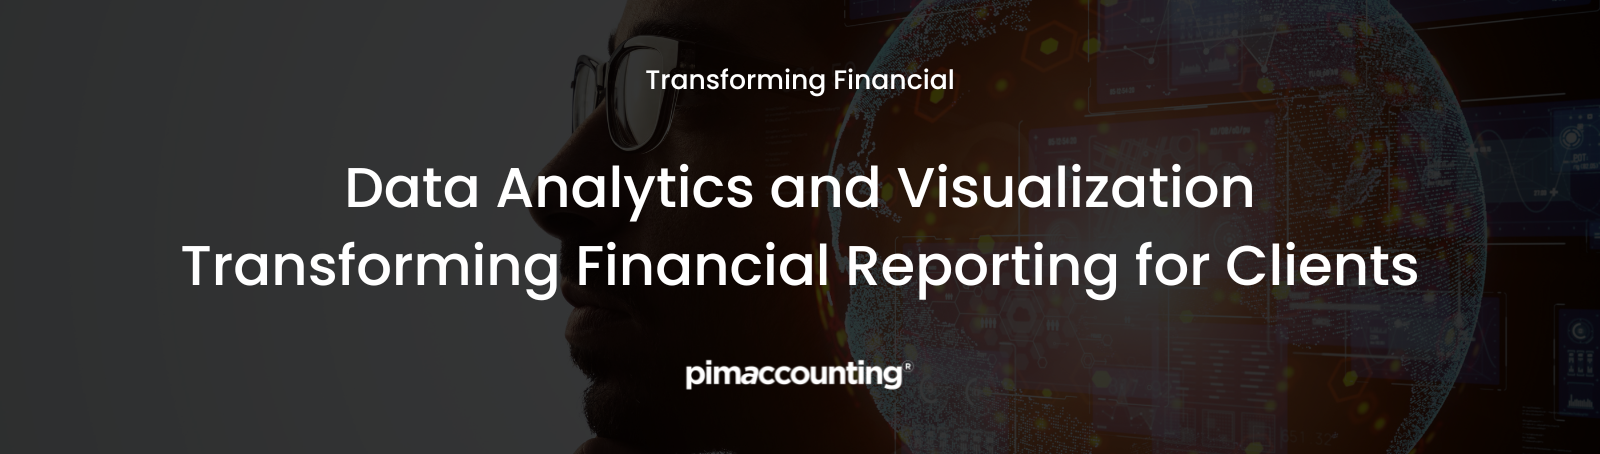 Data Analytics & Visualization: Transforming Financial Reporting